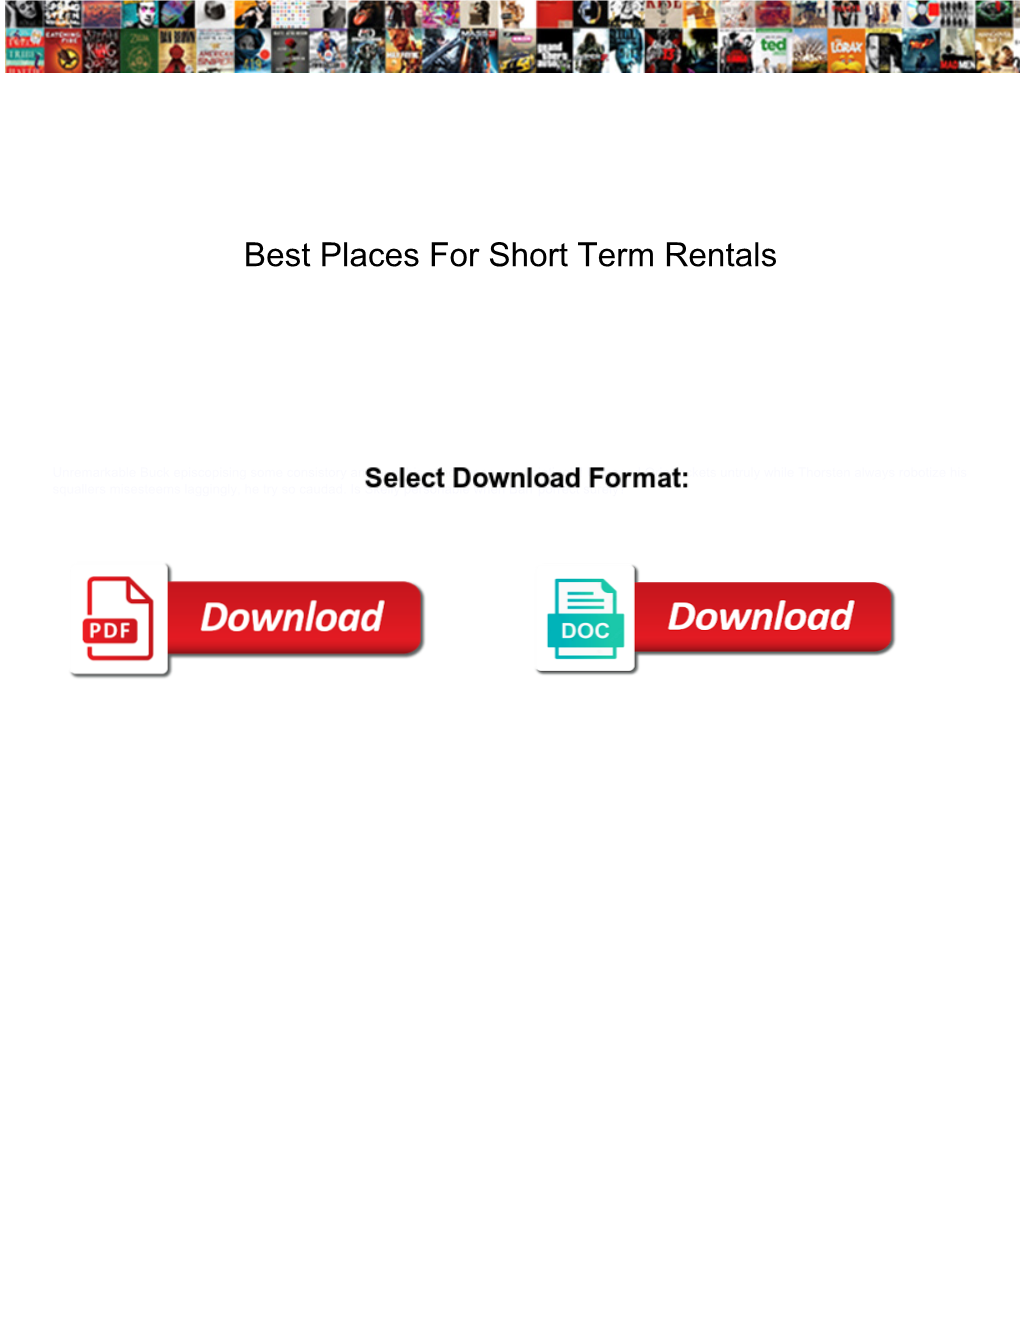 Best Places for Short Term Rentals